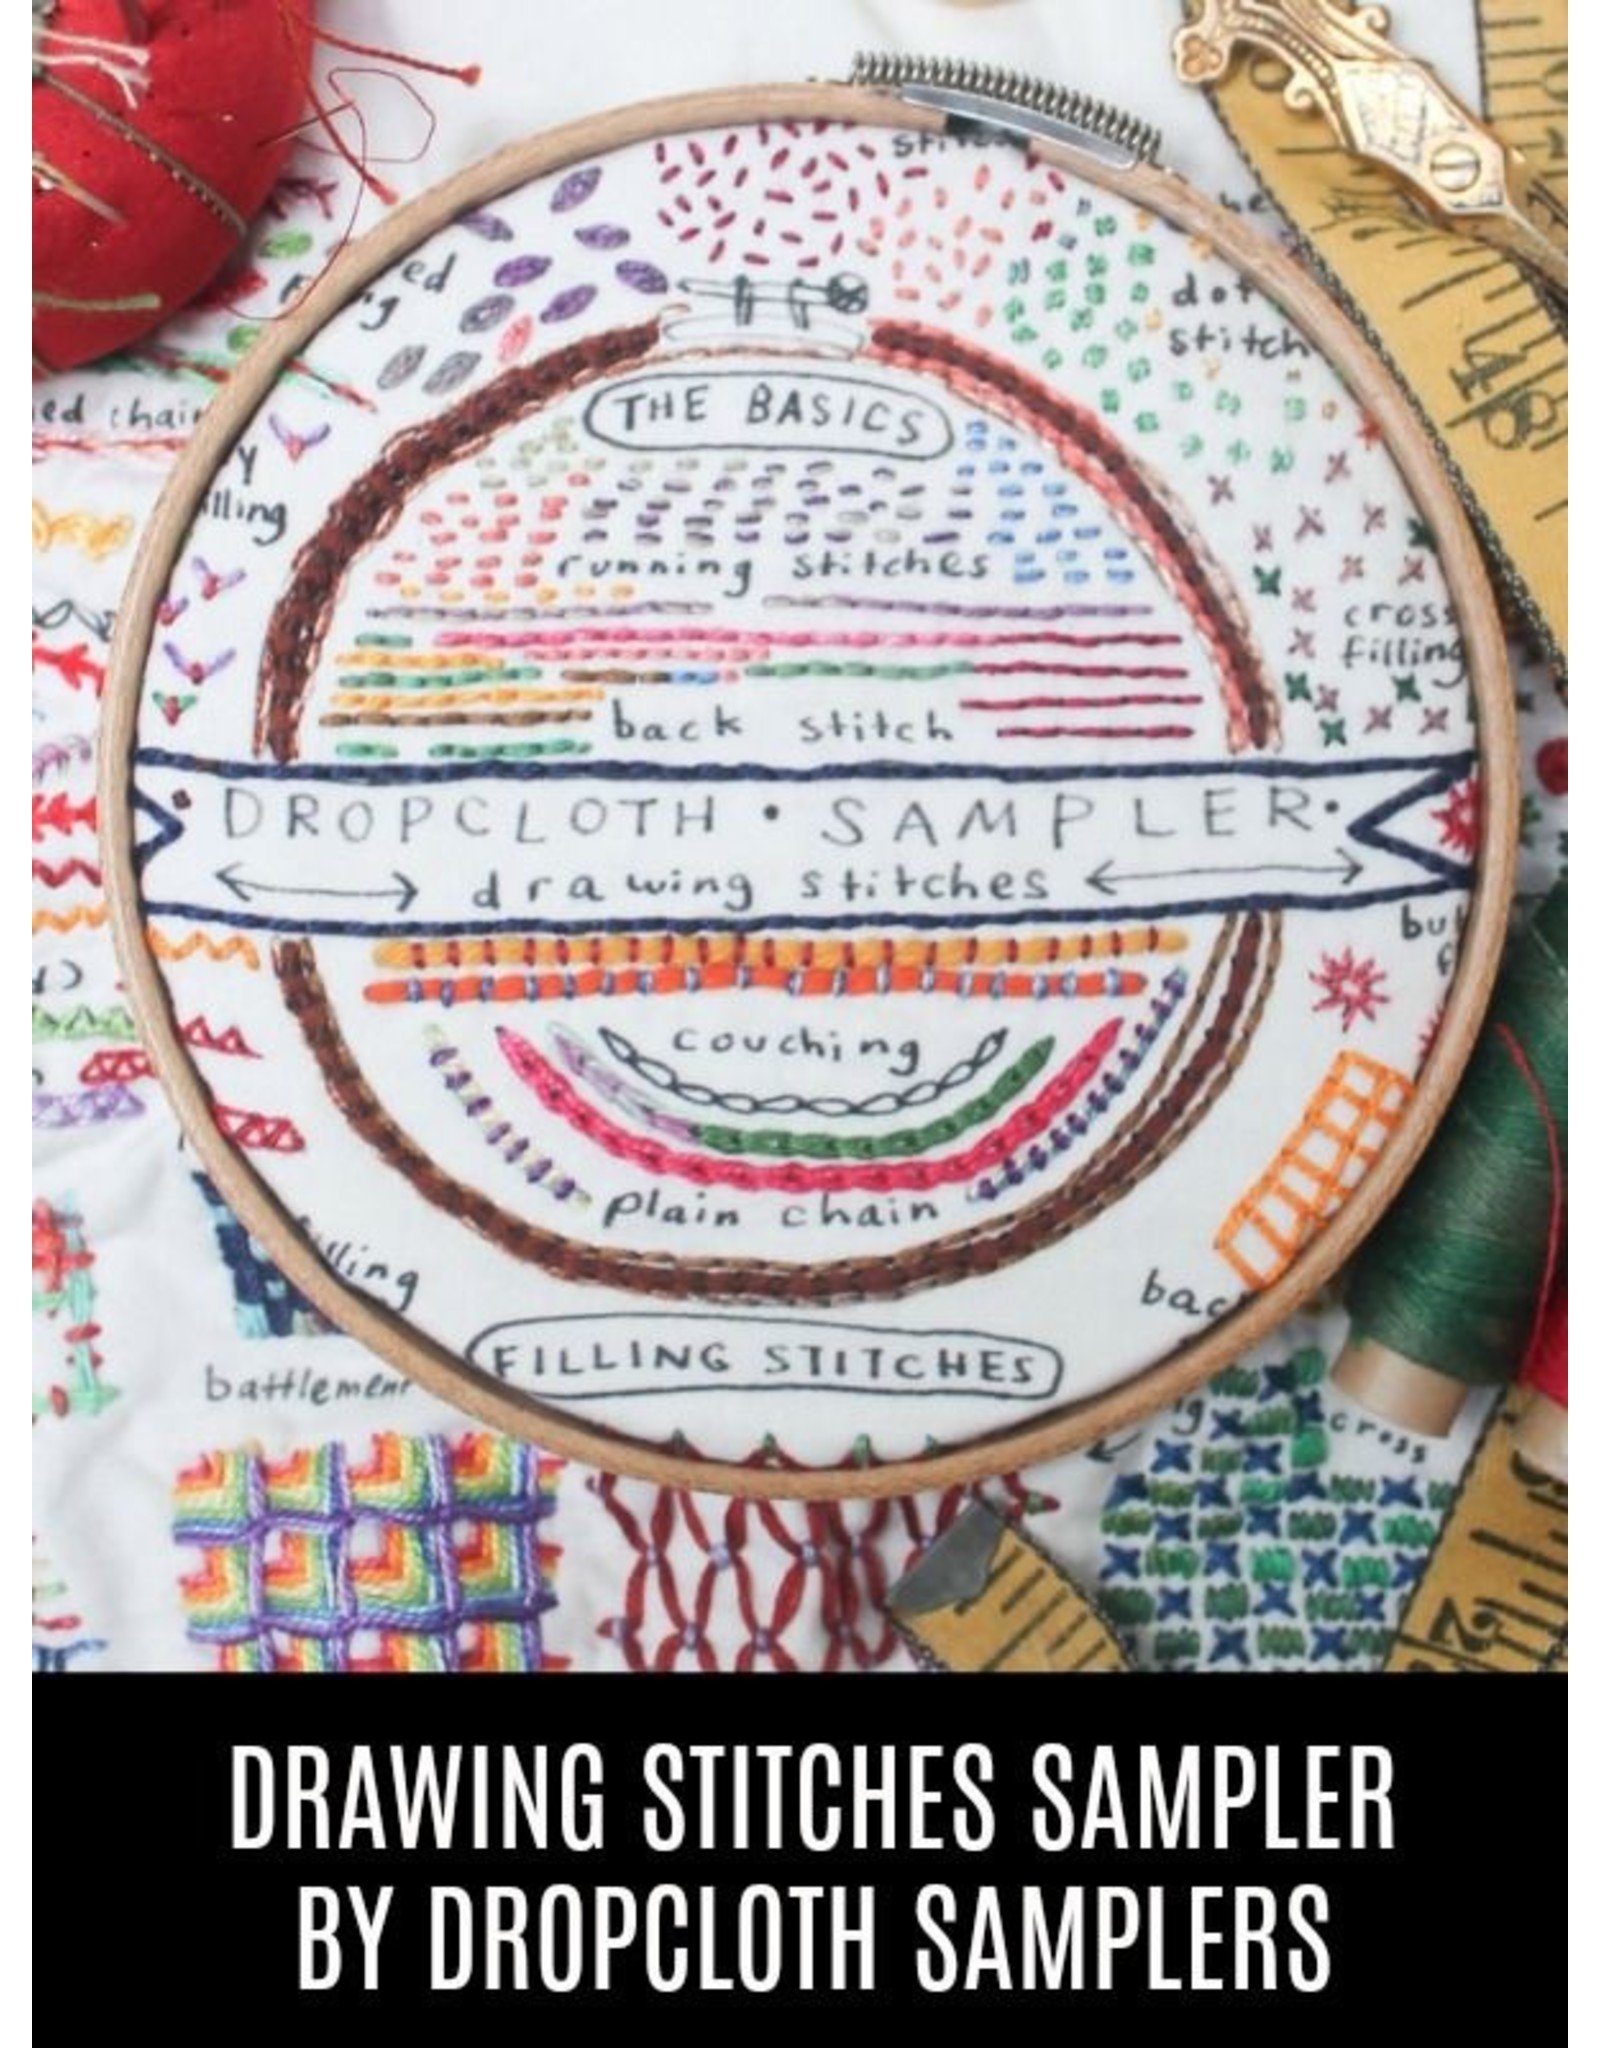 Dropcloth Samplers Drawing Stitches Sampler, Embroidery Sampler from Dropcloth Samplers